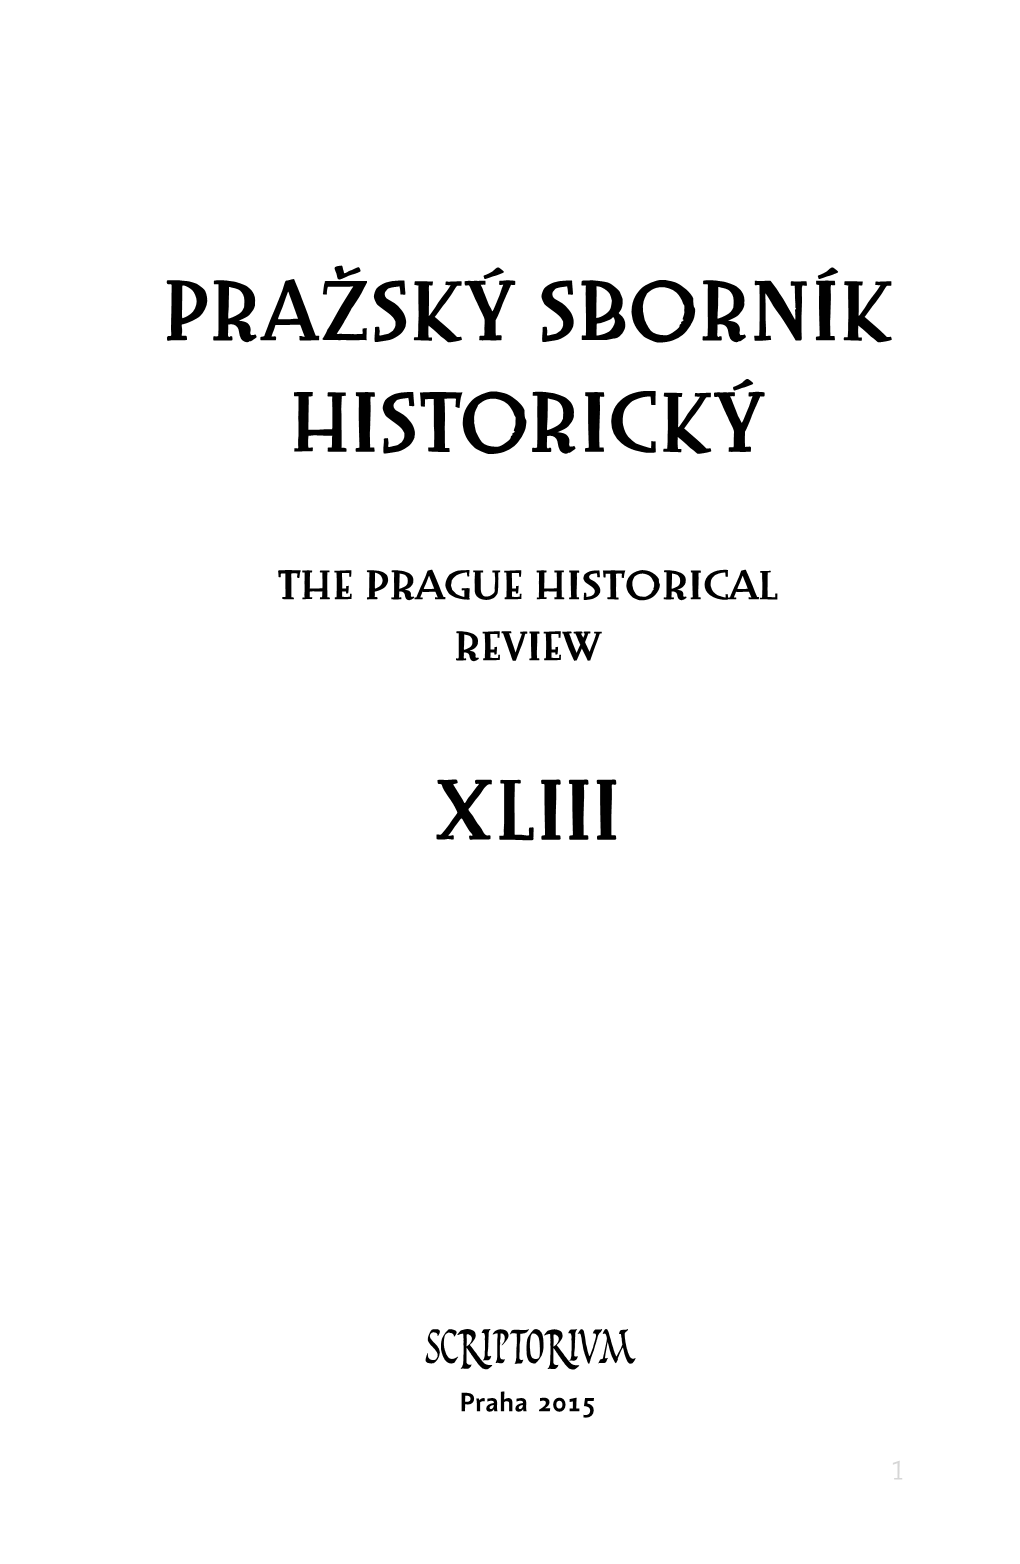 Pražský Sborník Historický XLIII, 2015